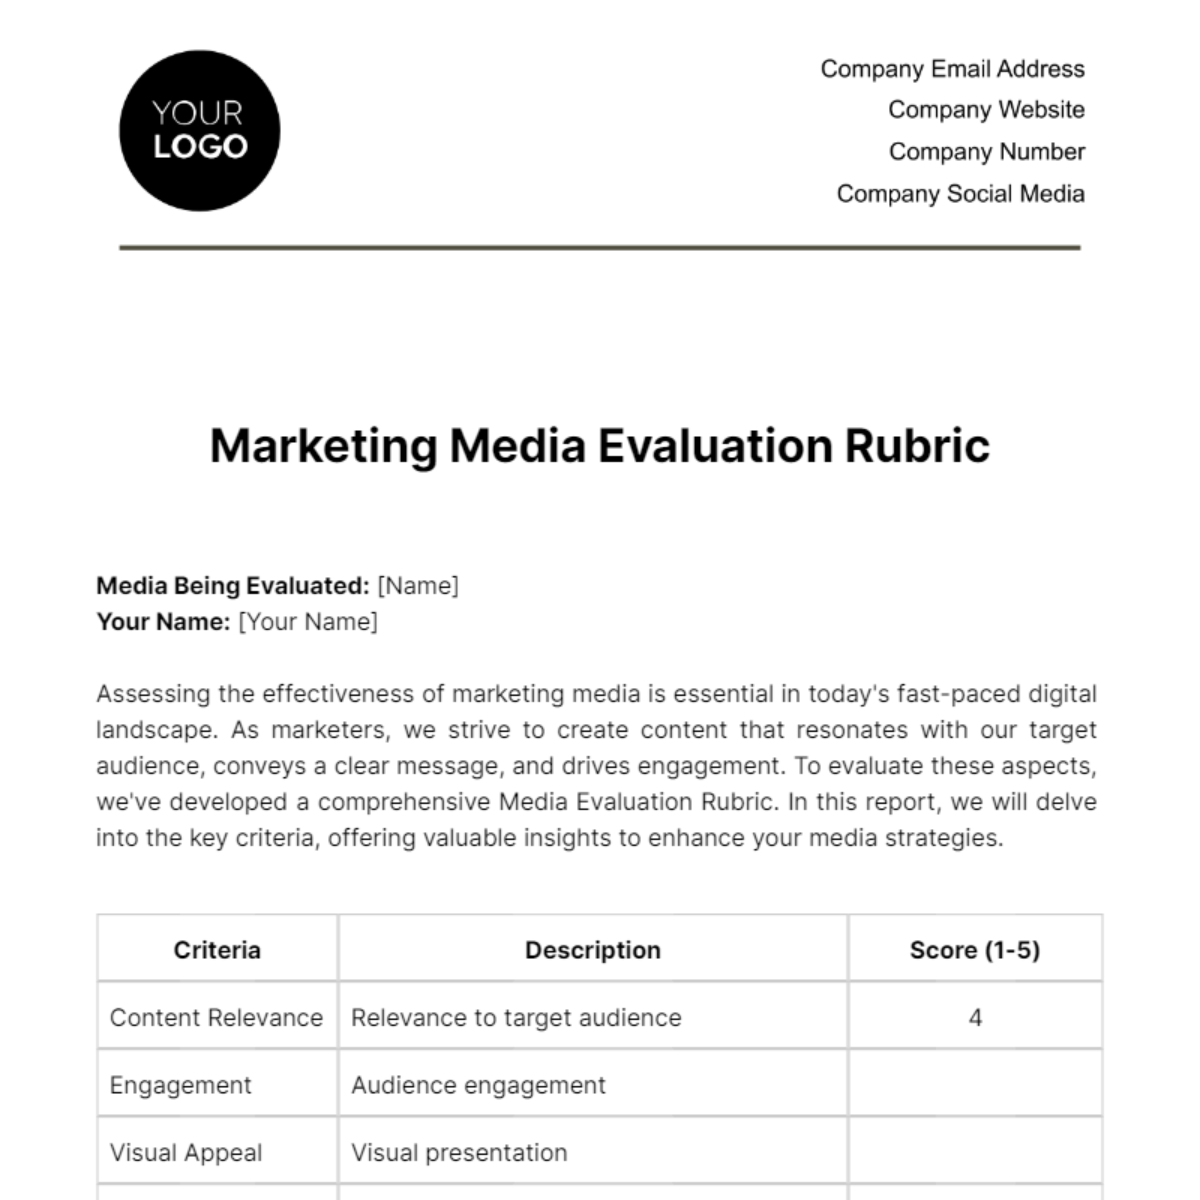 Marketing Media Evaluation Rubric Template